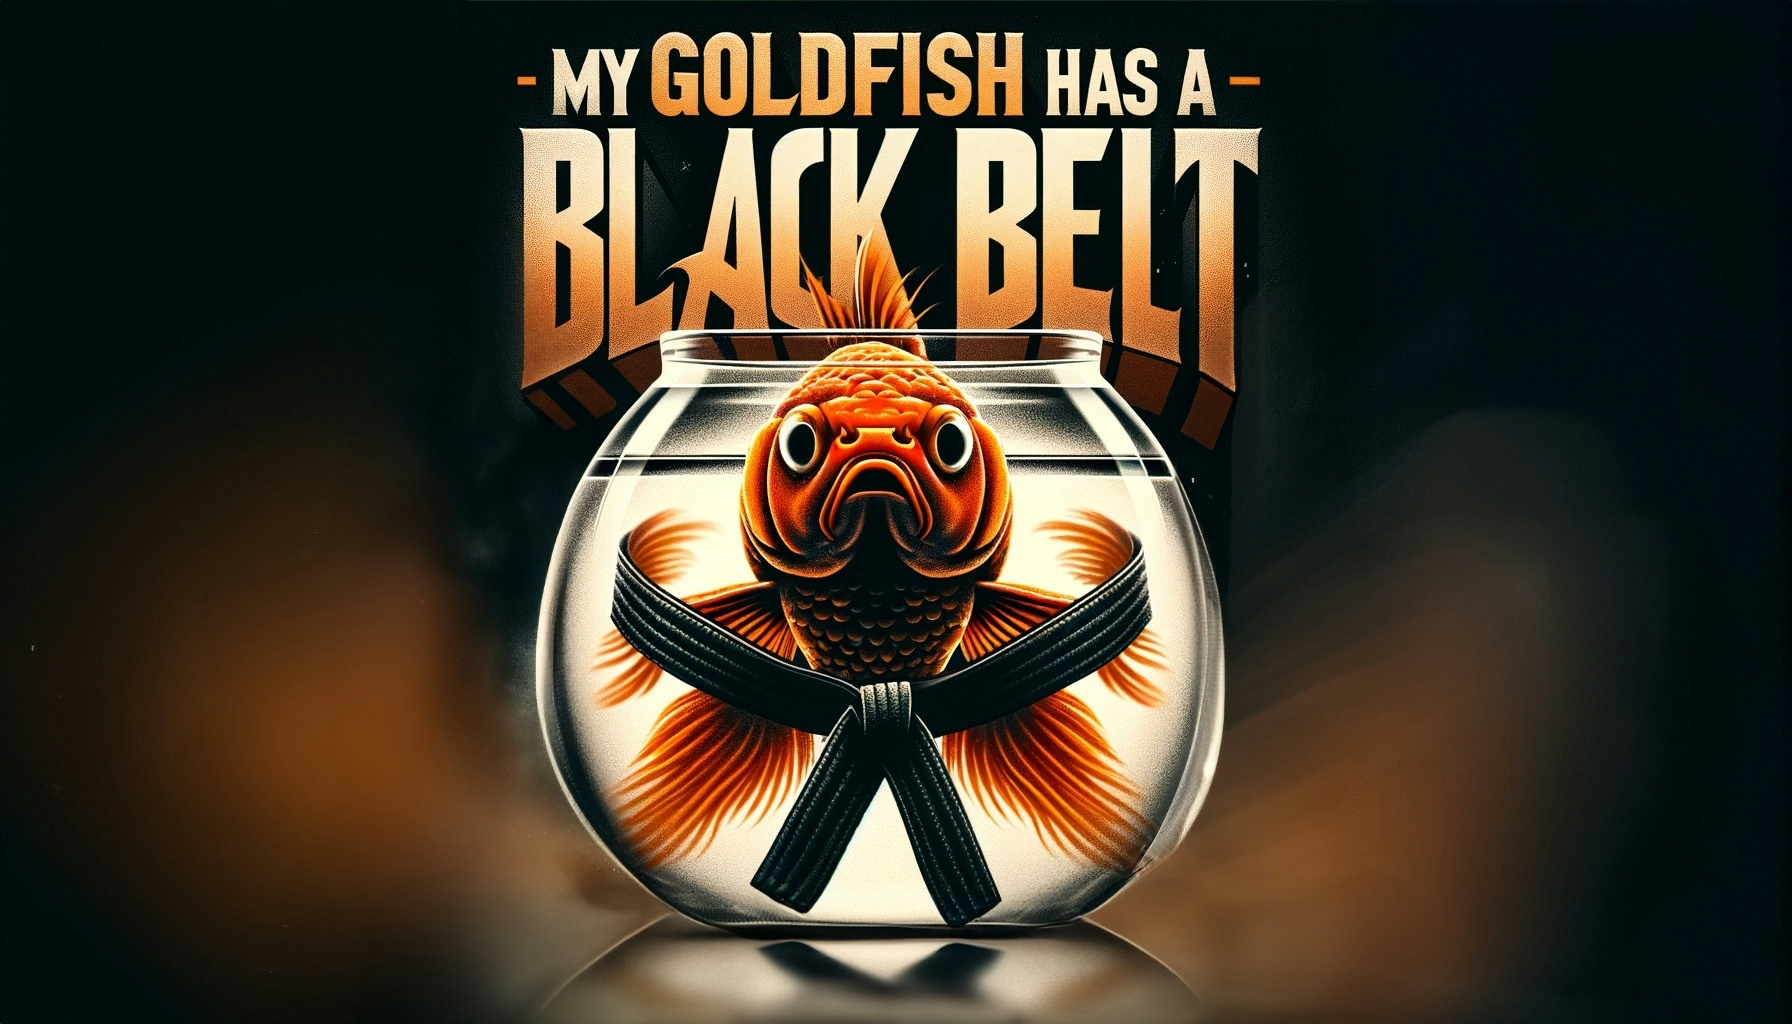 My Goldfish has a Black Belt